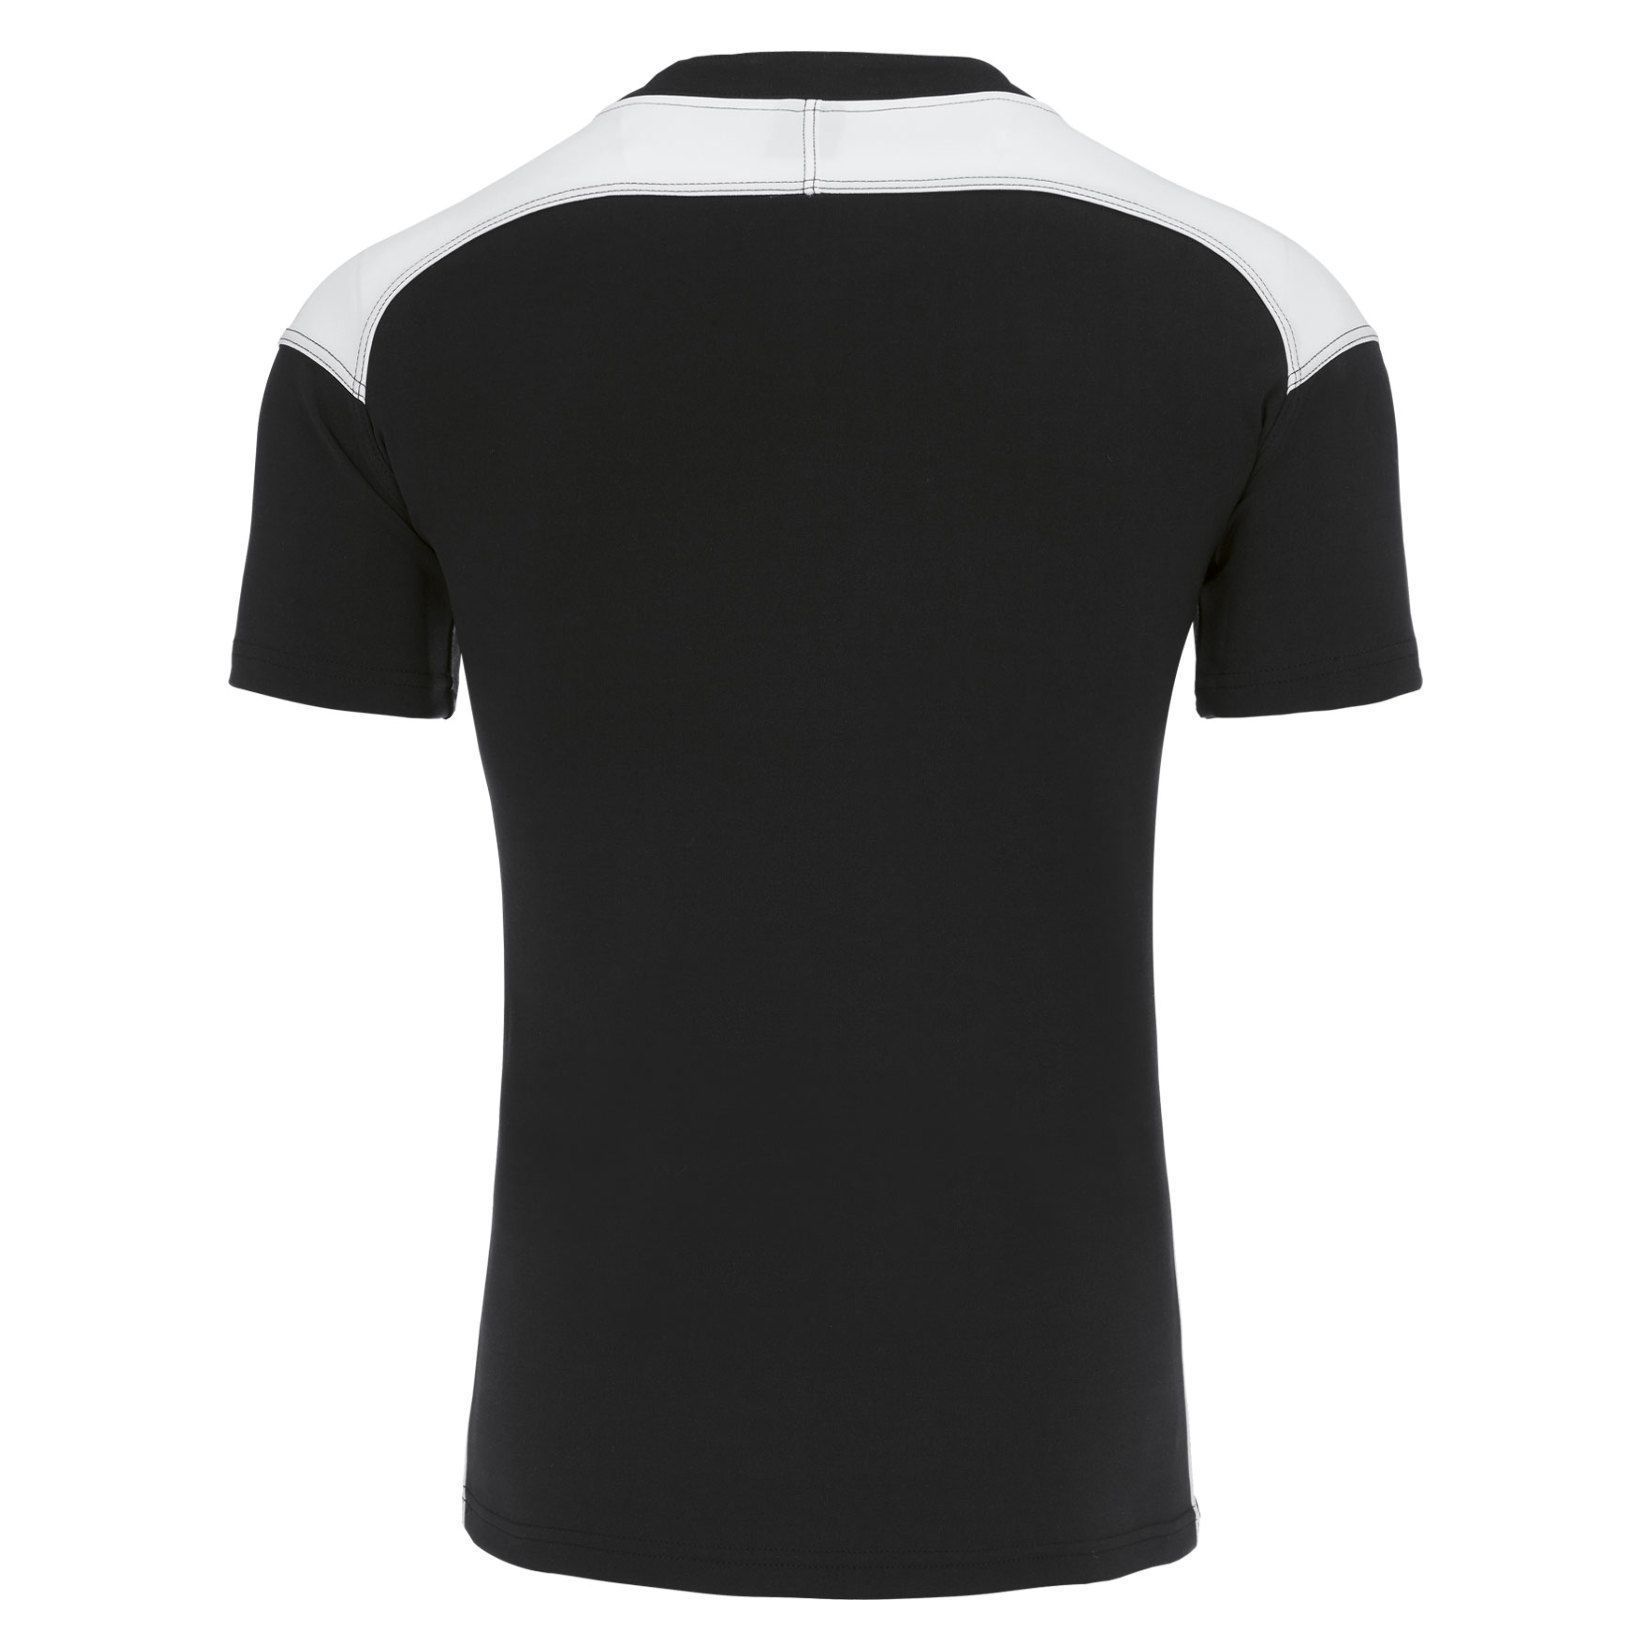 Errea Skarlet Rugby Shirt - Kitlocker.com